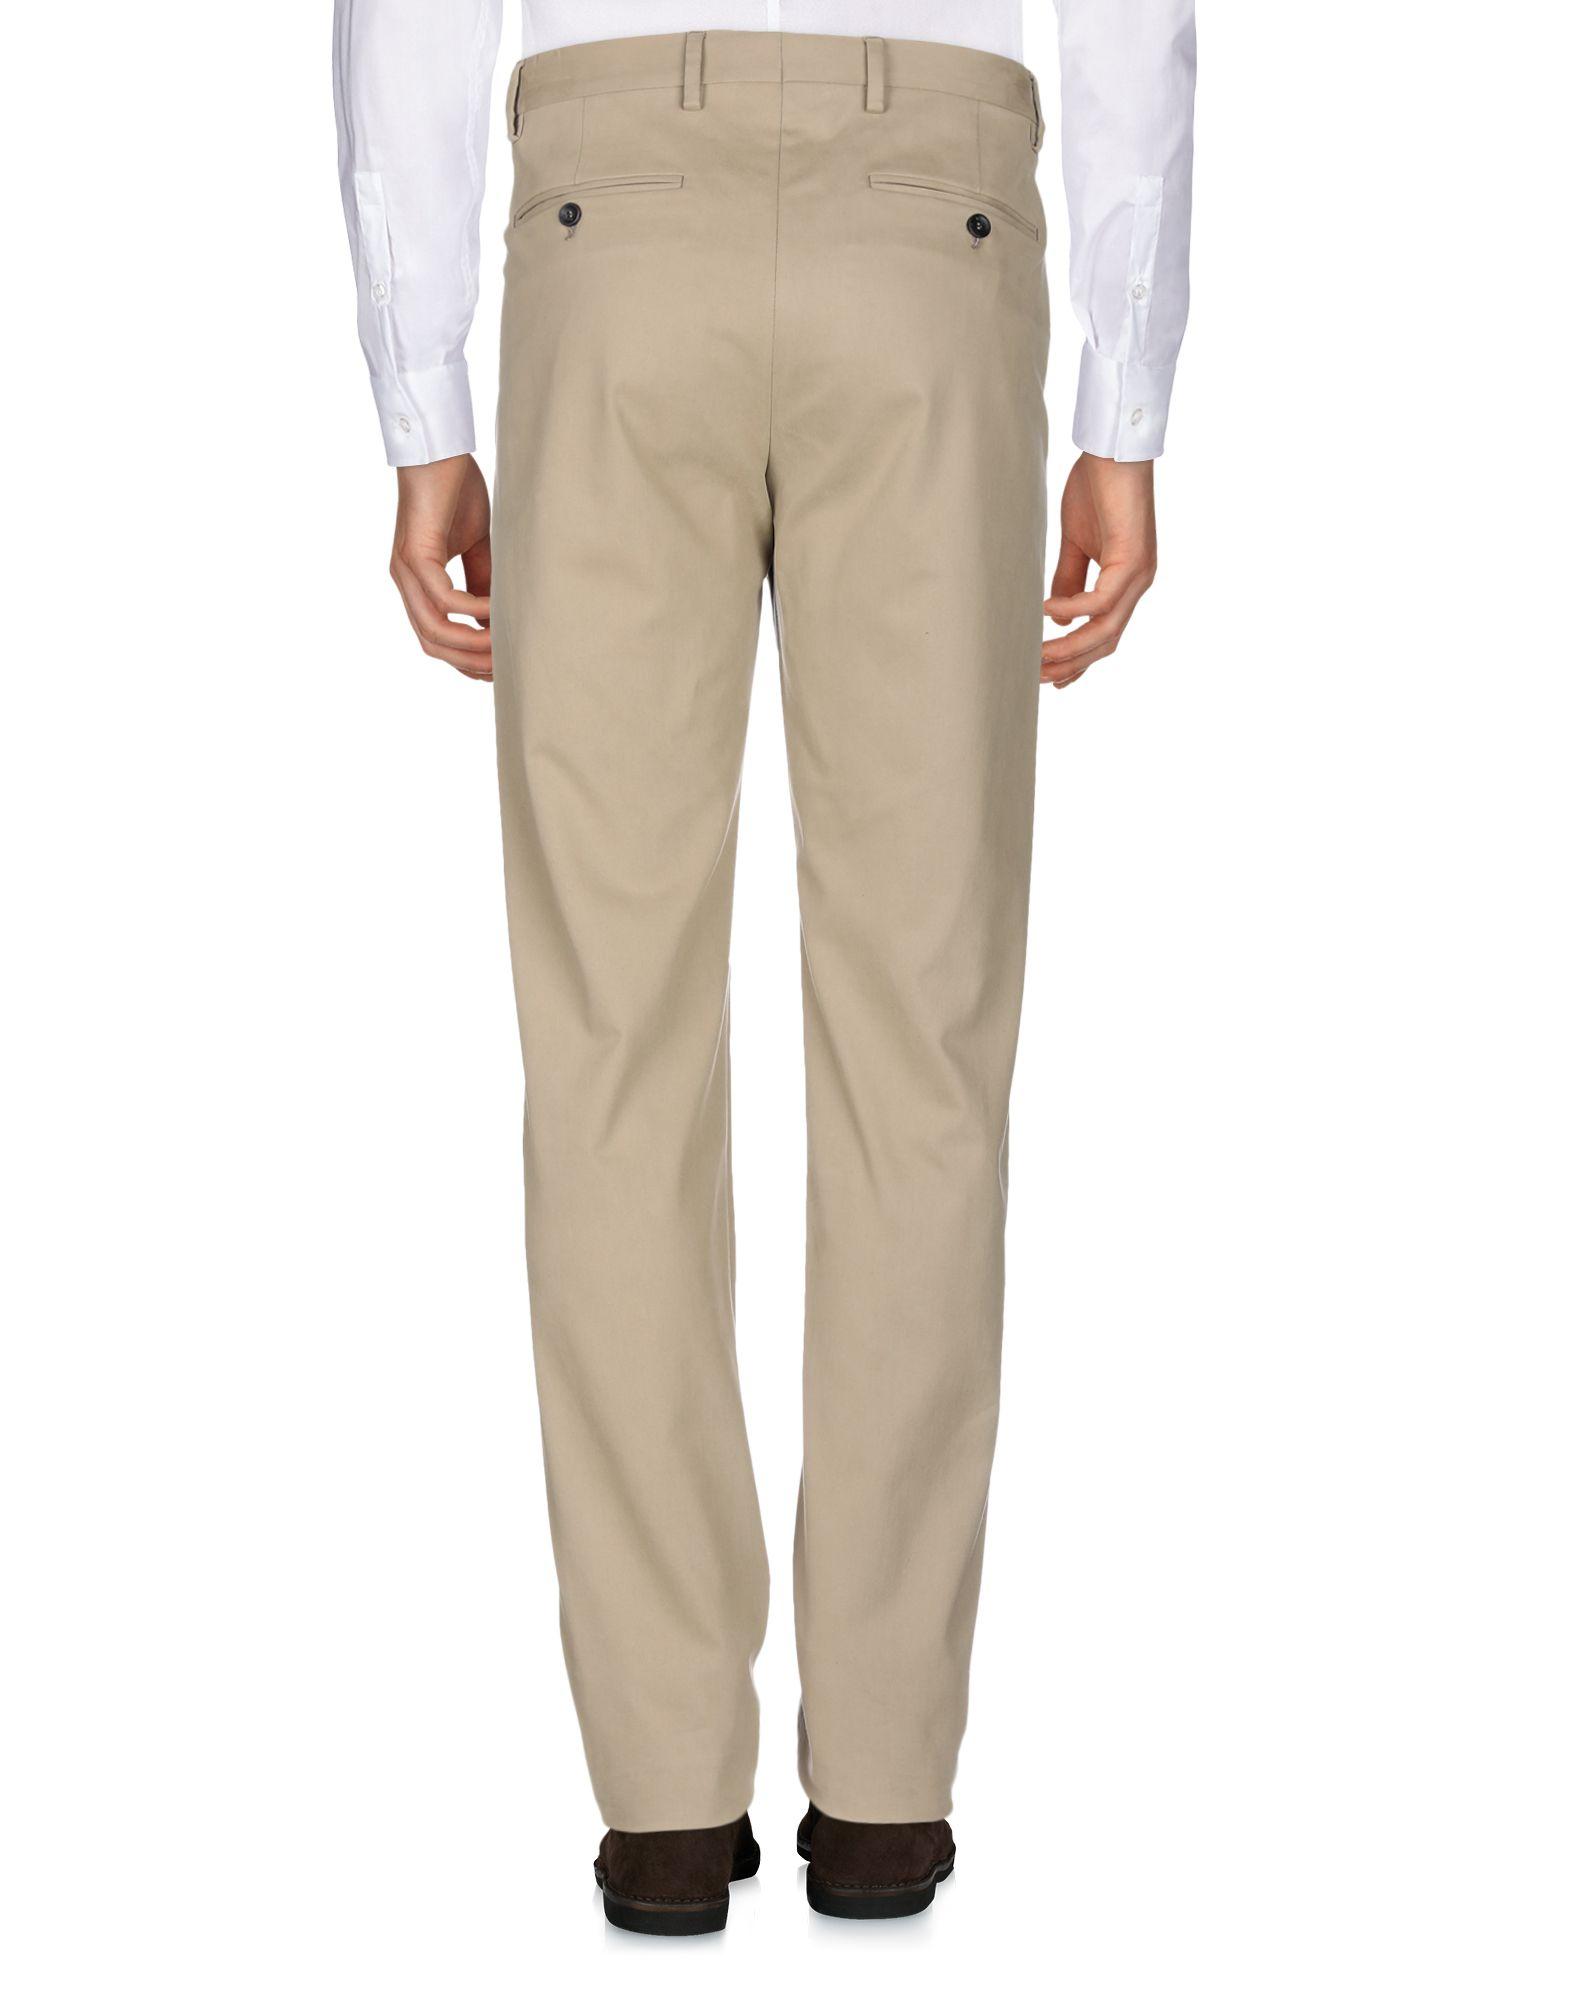 Giorgio Armani Cotton Casual Pants in Khaki (Natural) for Men - Lyst